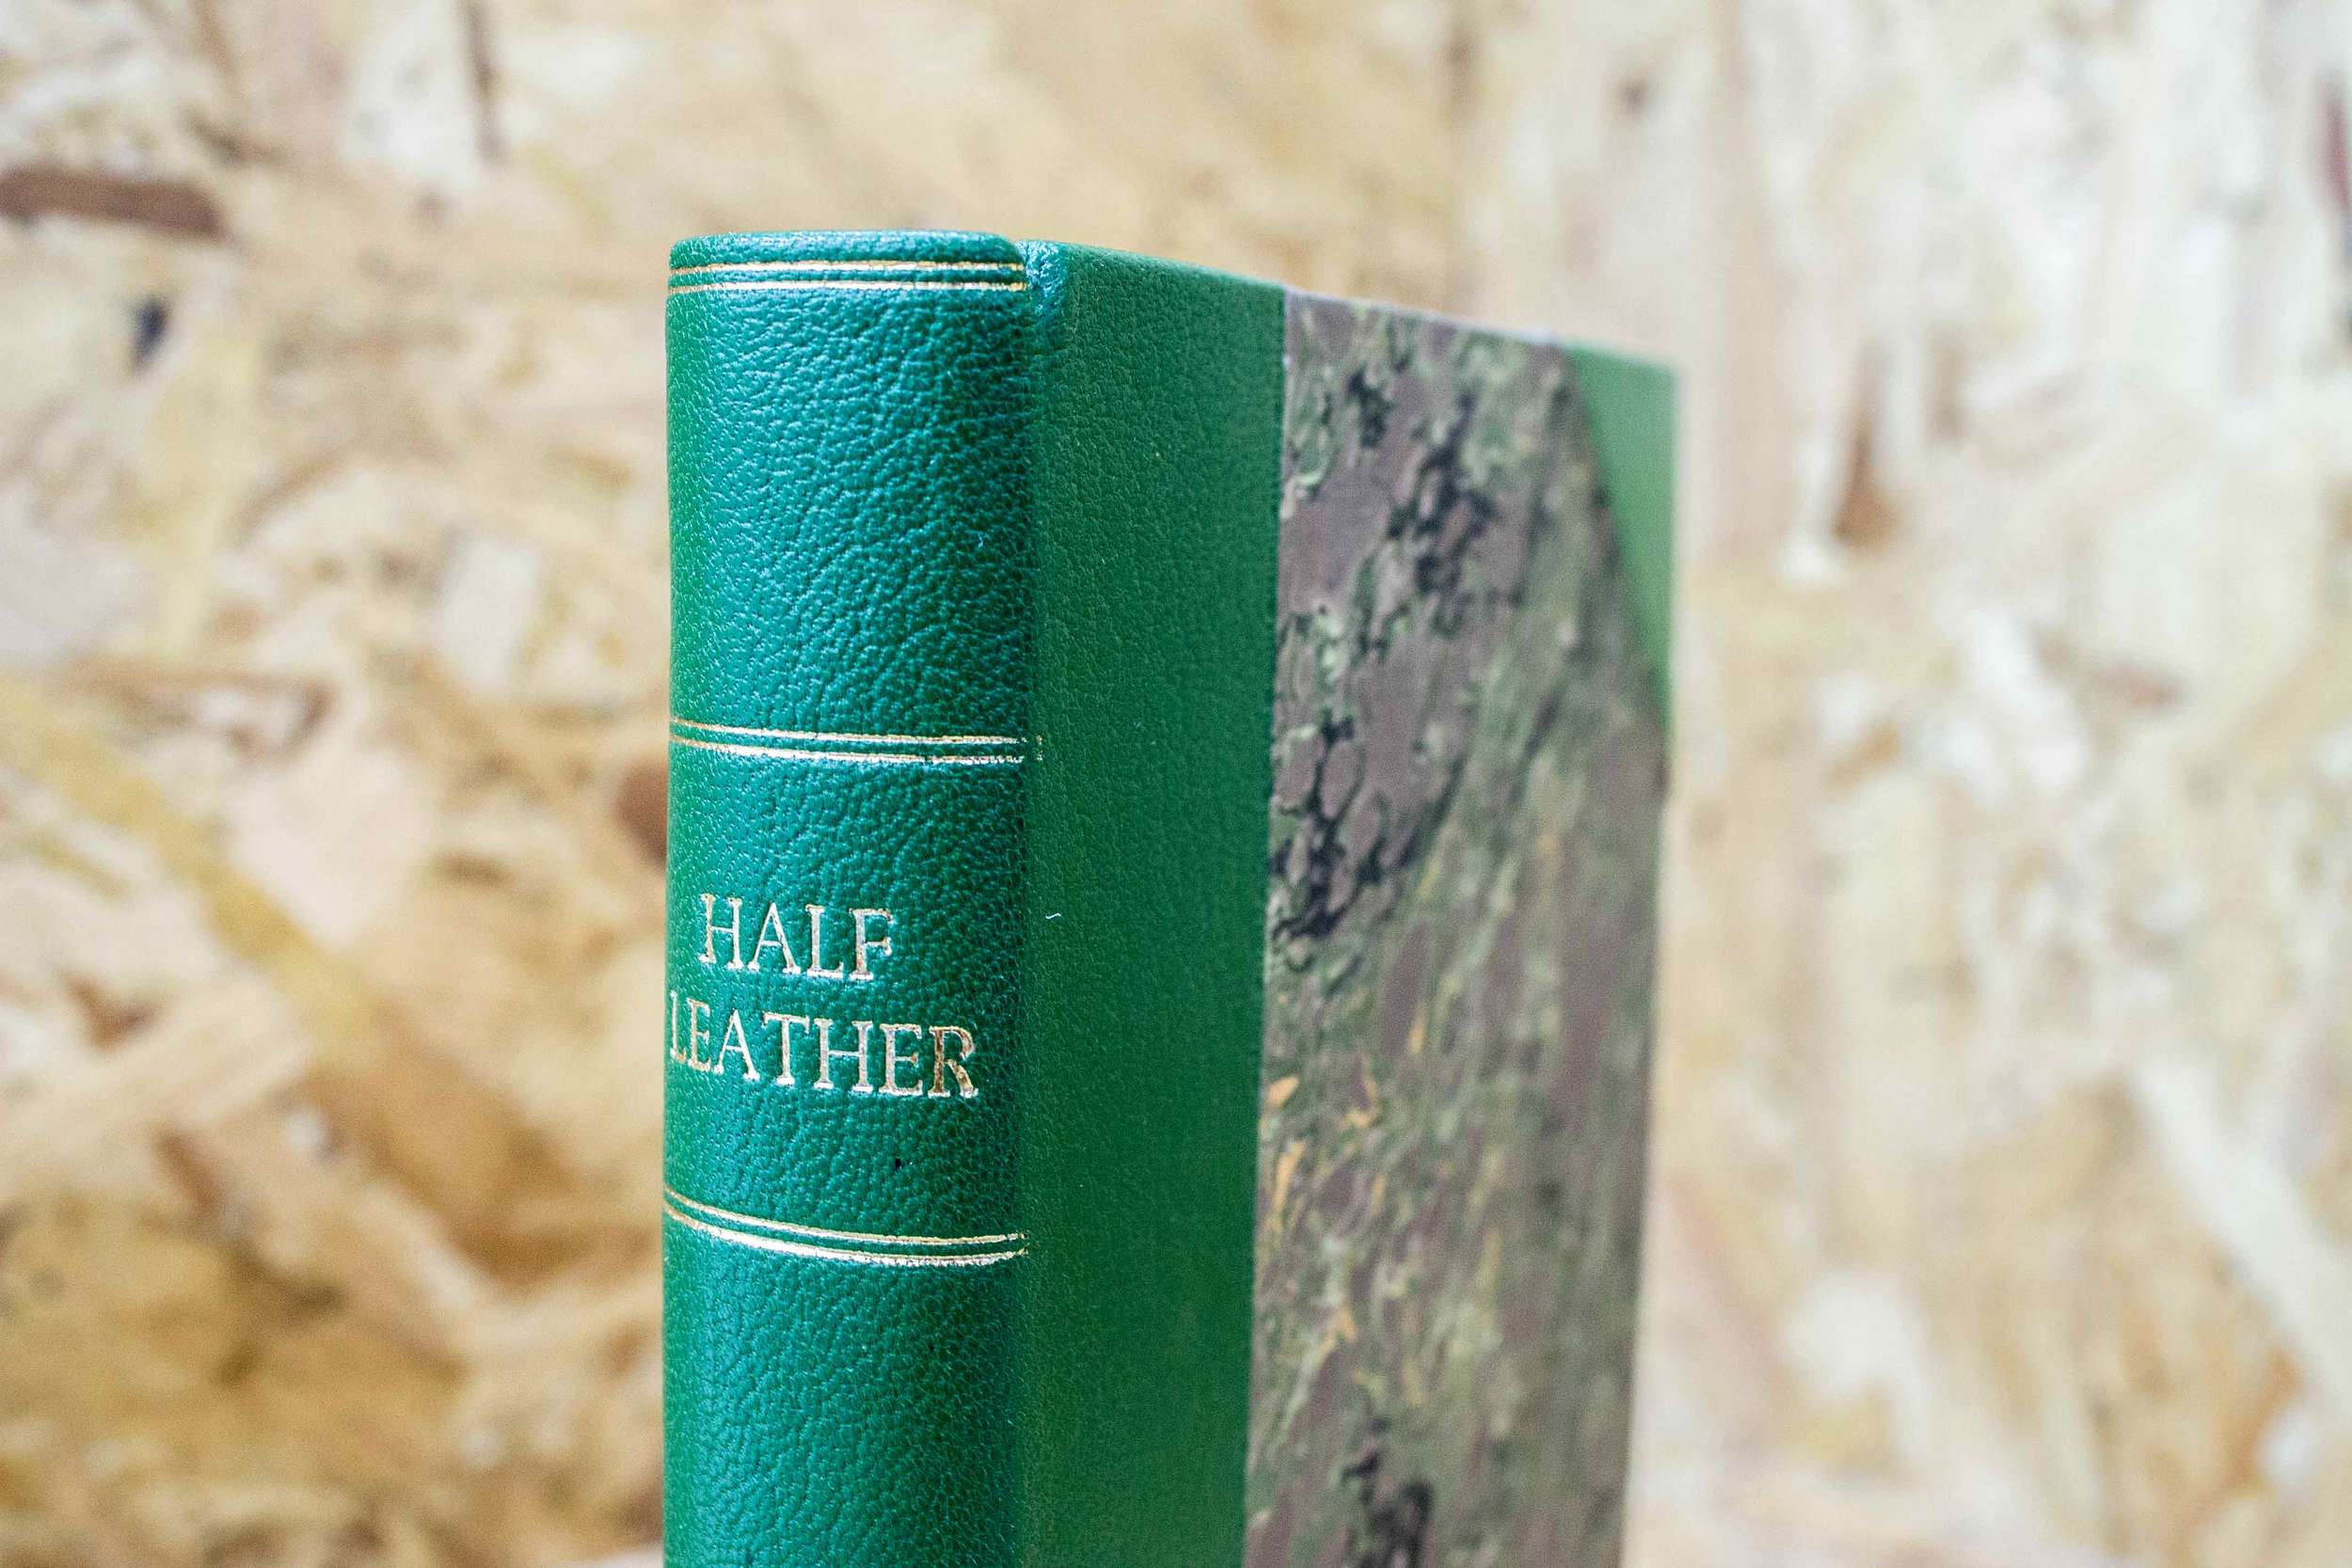 Half-bound leather book